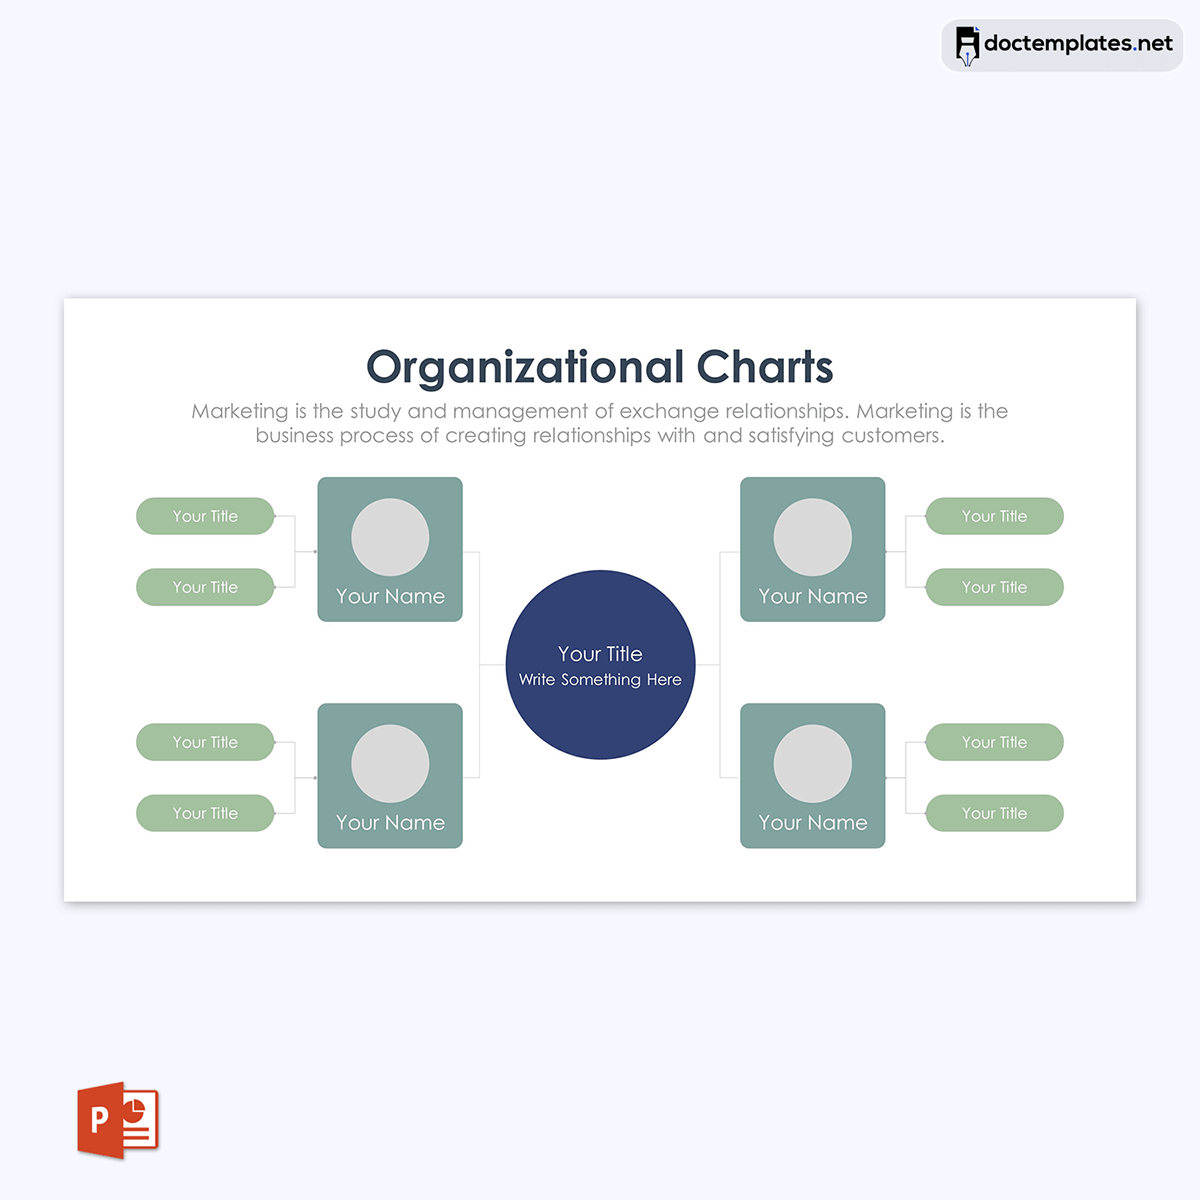 
visio organization chart templates
02